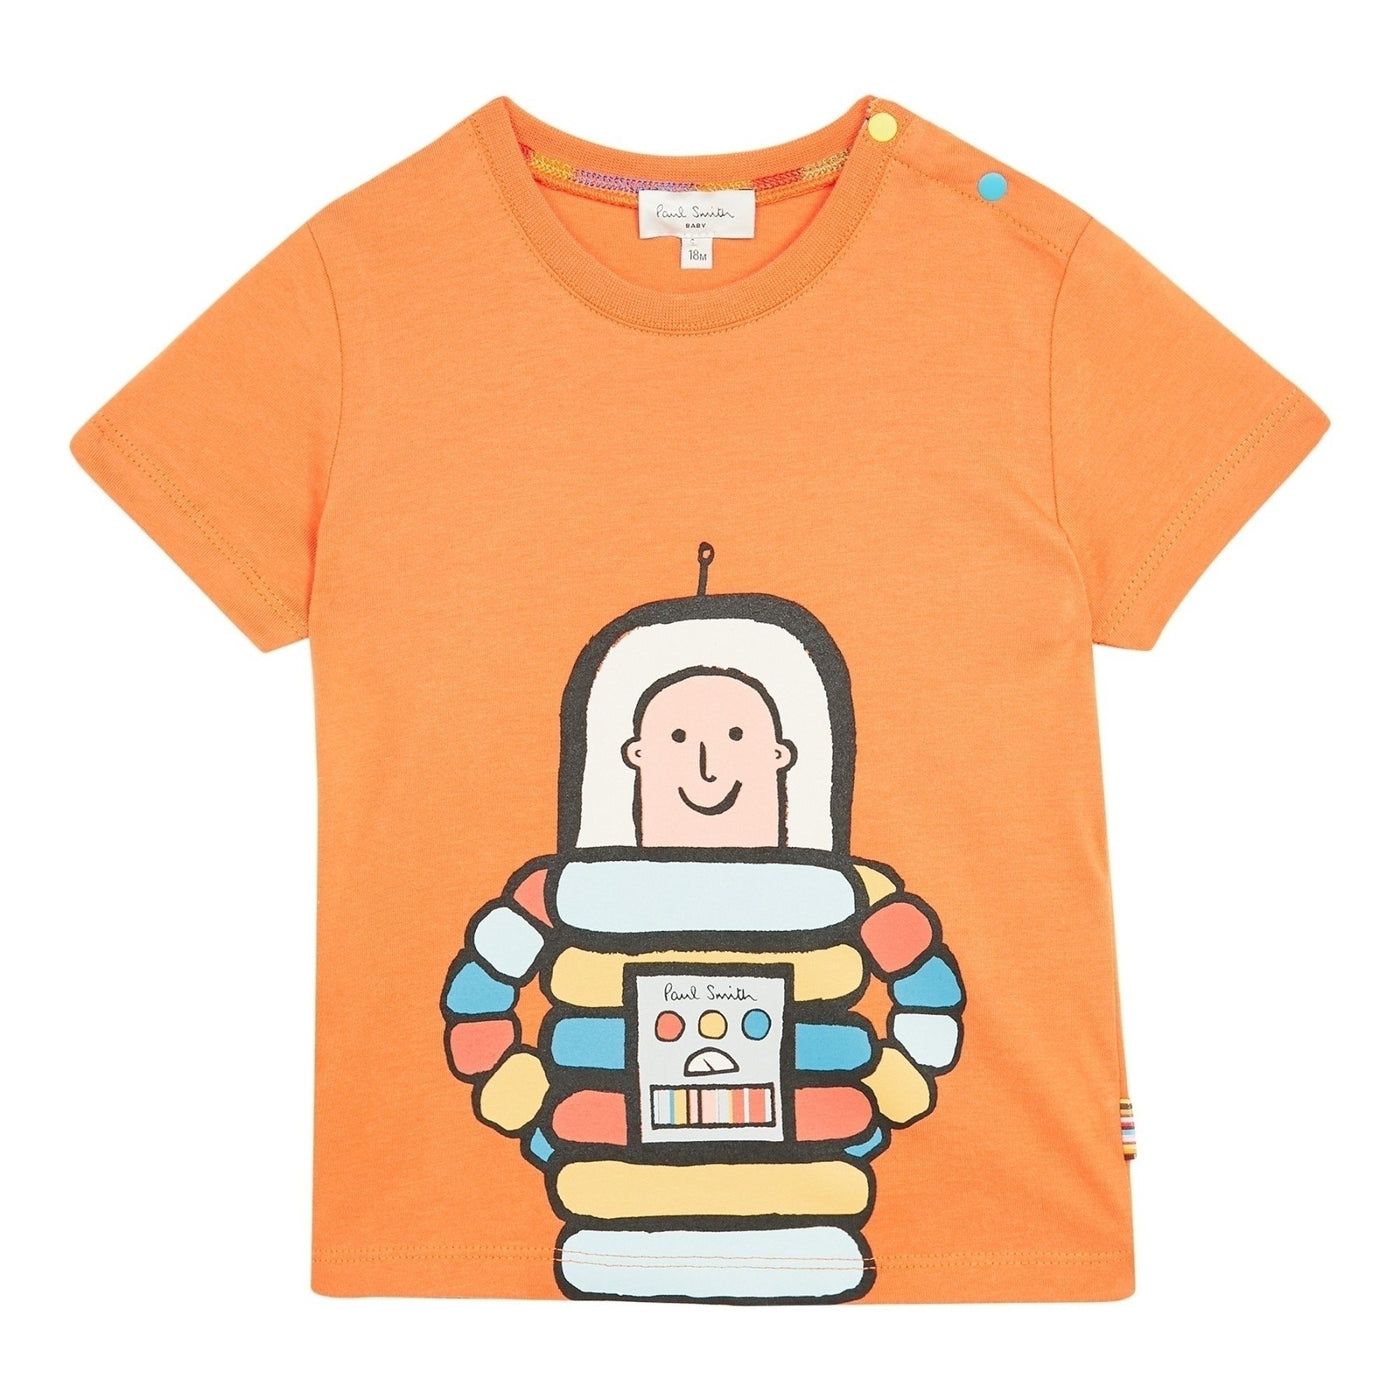 Paul Smith Junior Kids Rodrigue Astronaut Print T-Shirt in Sunset Orange 5L10601 761